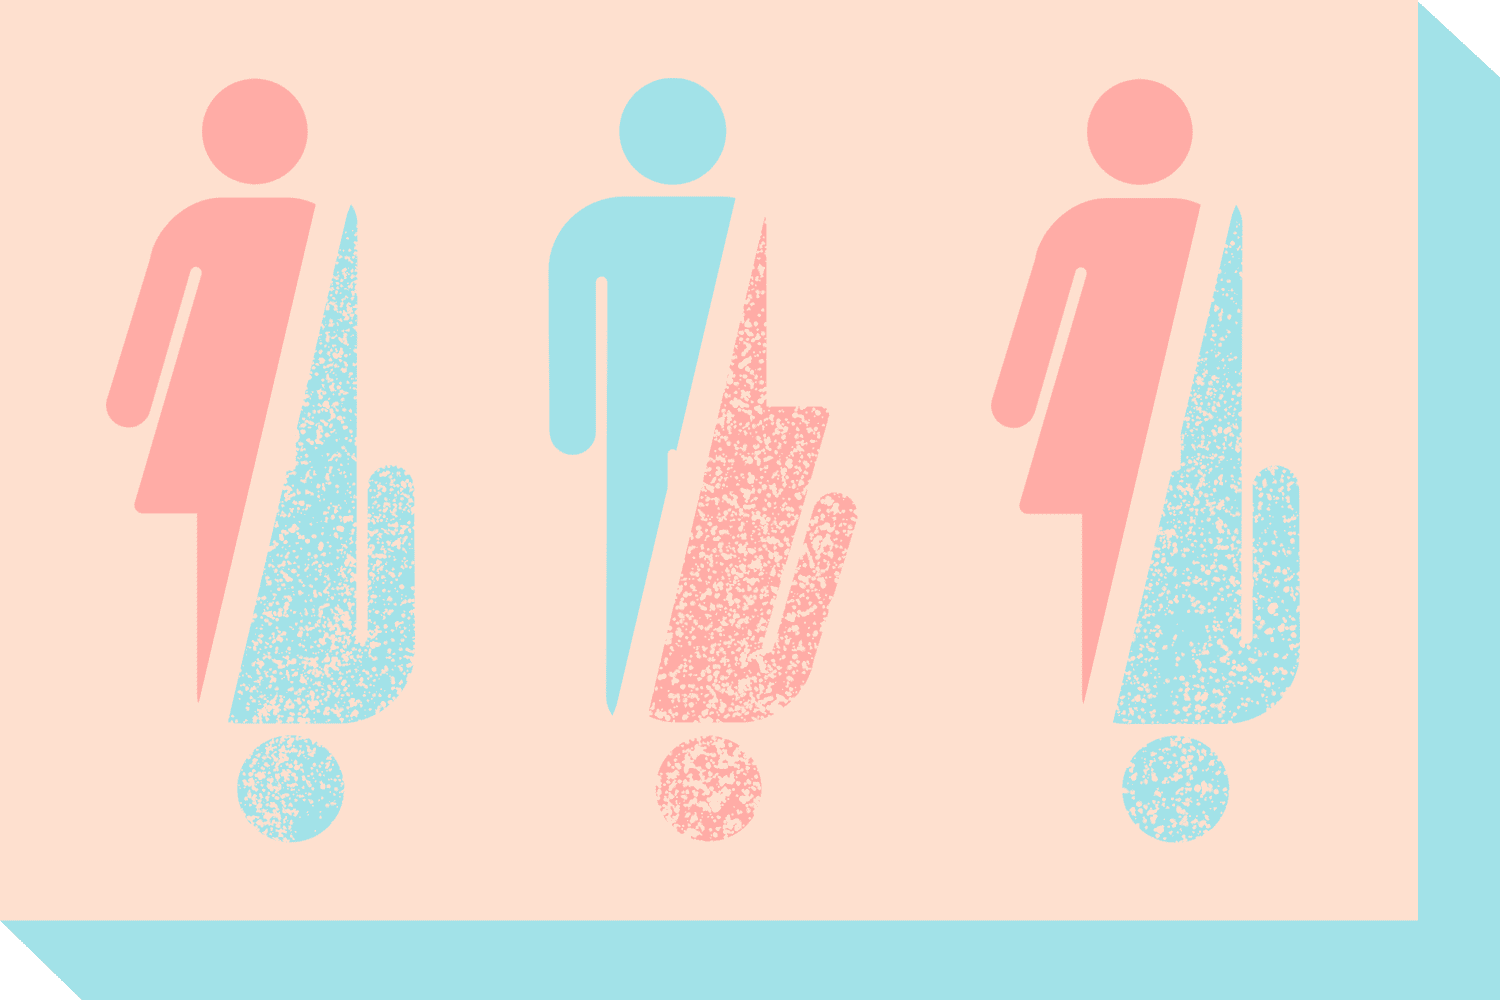 illustration showing gender fluidity